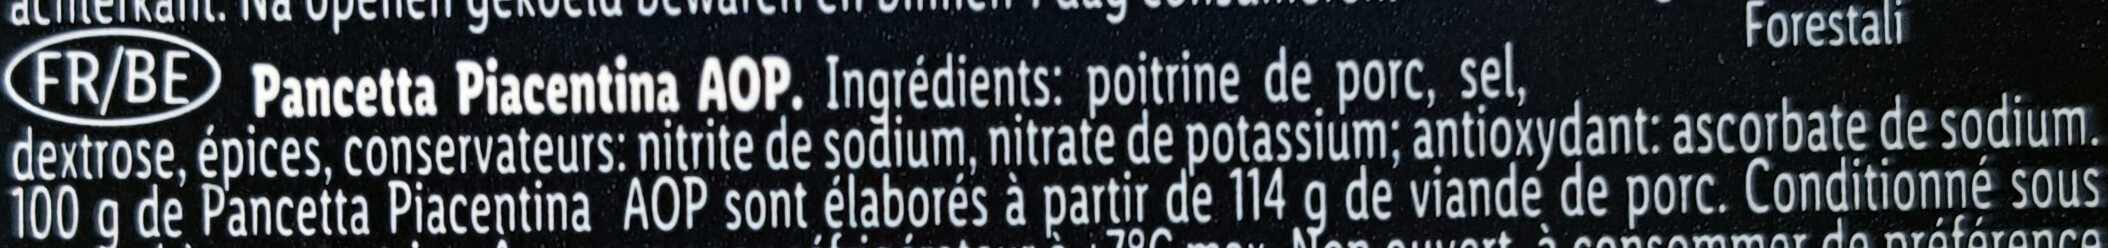 Pancetta piacentina DOP - Ingrédients